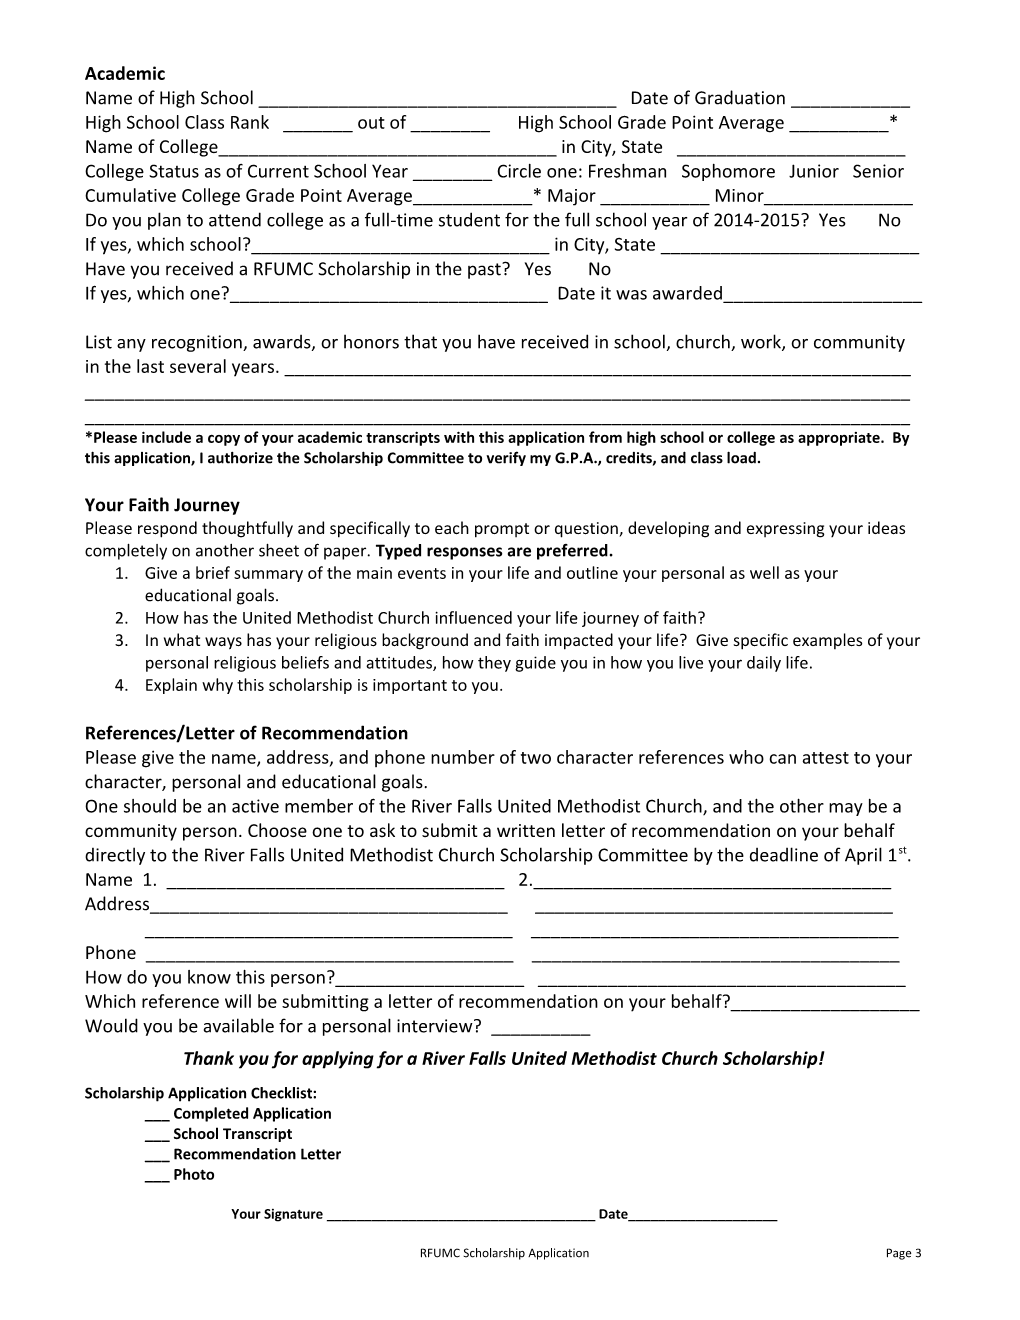 United Methodist Church Scholarship Application 2014 - 2015